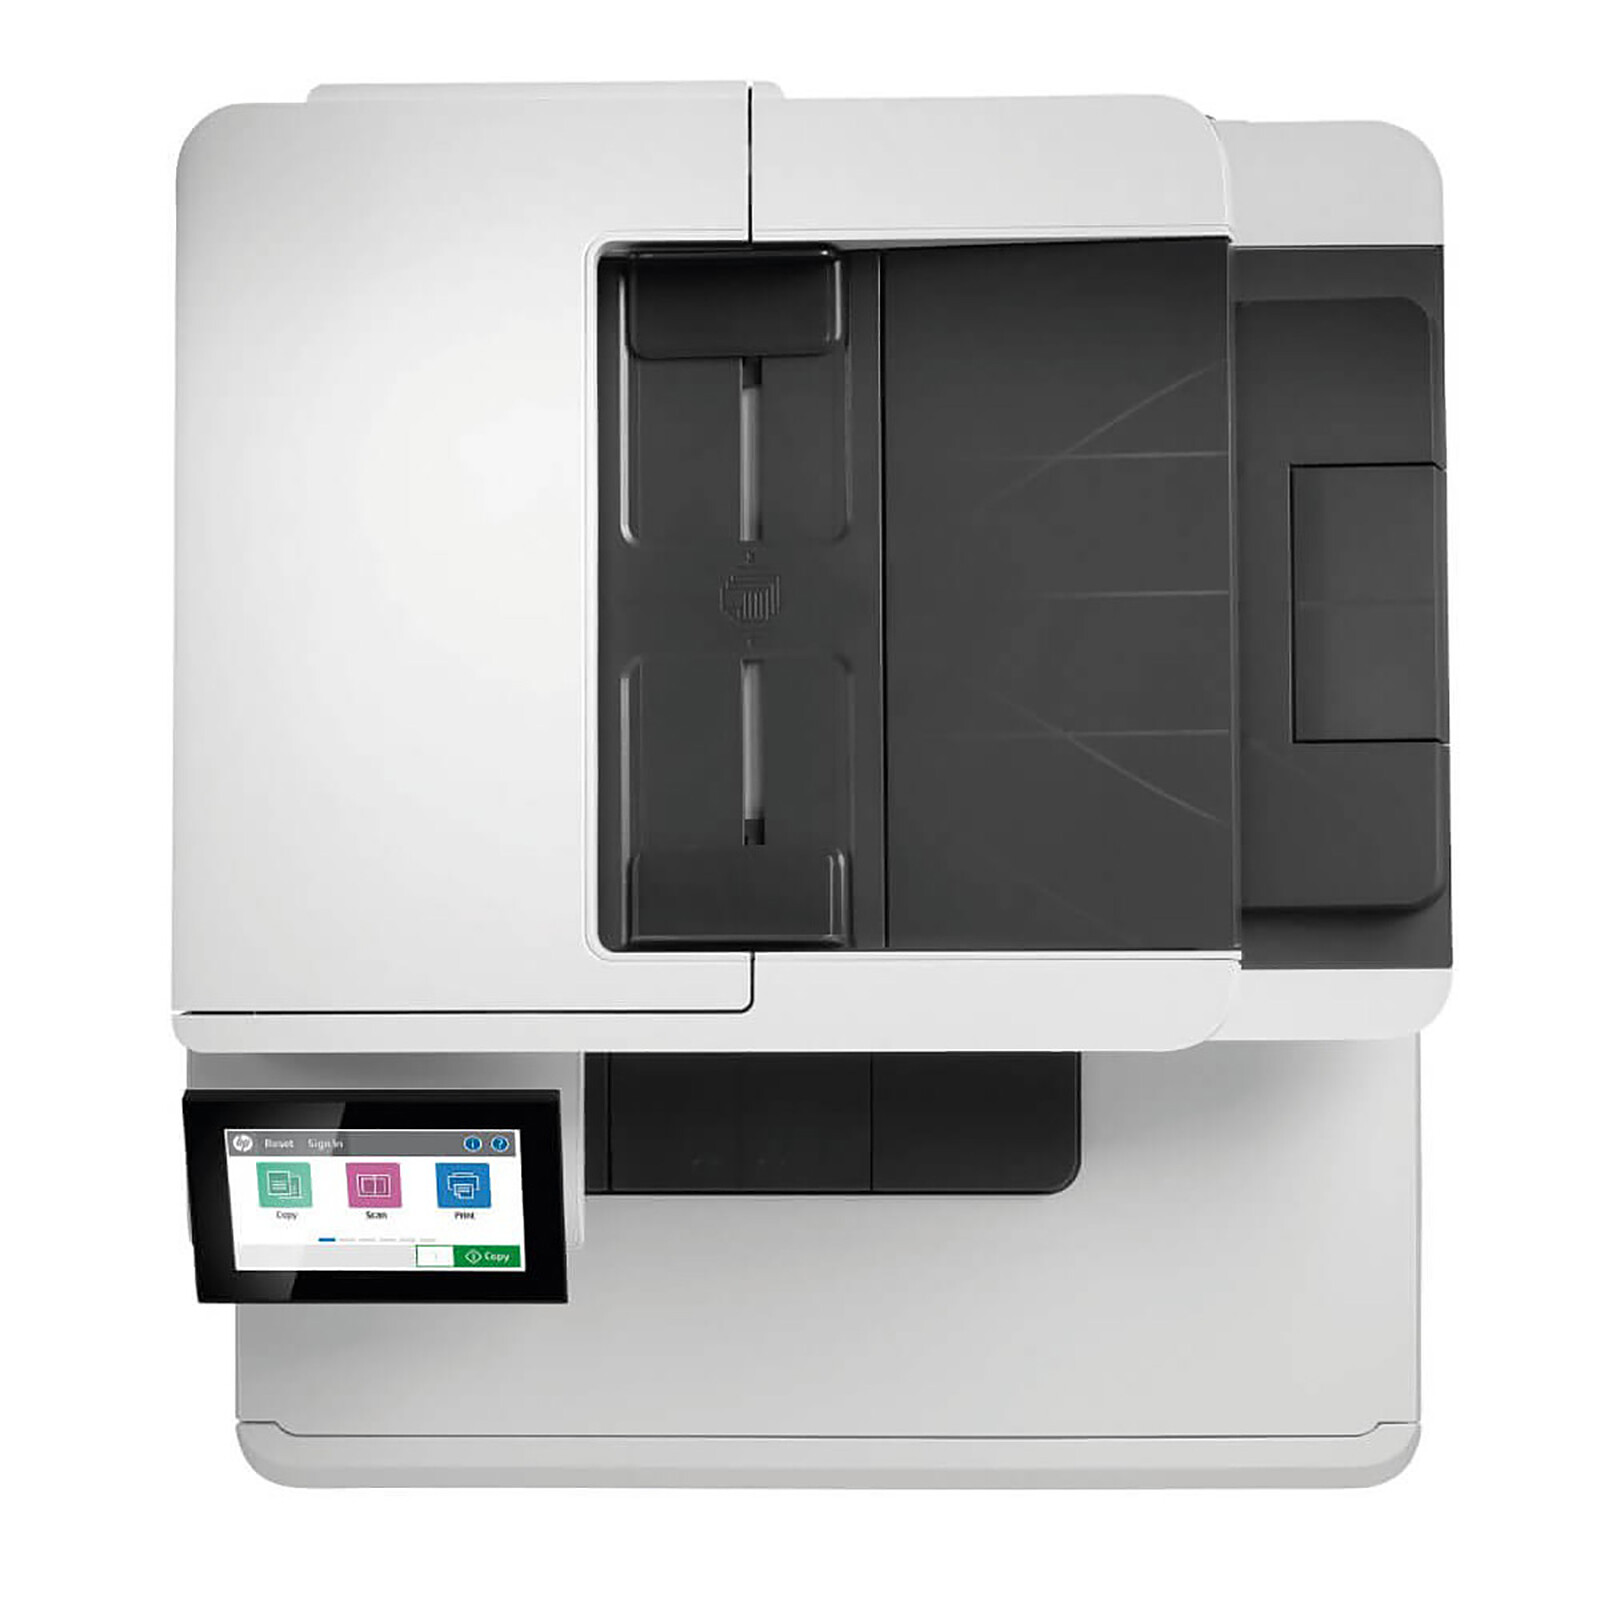 HP Color LaserJet Pro - Installation du bac d'alimentation papier en option